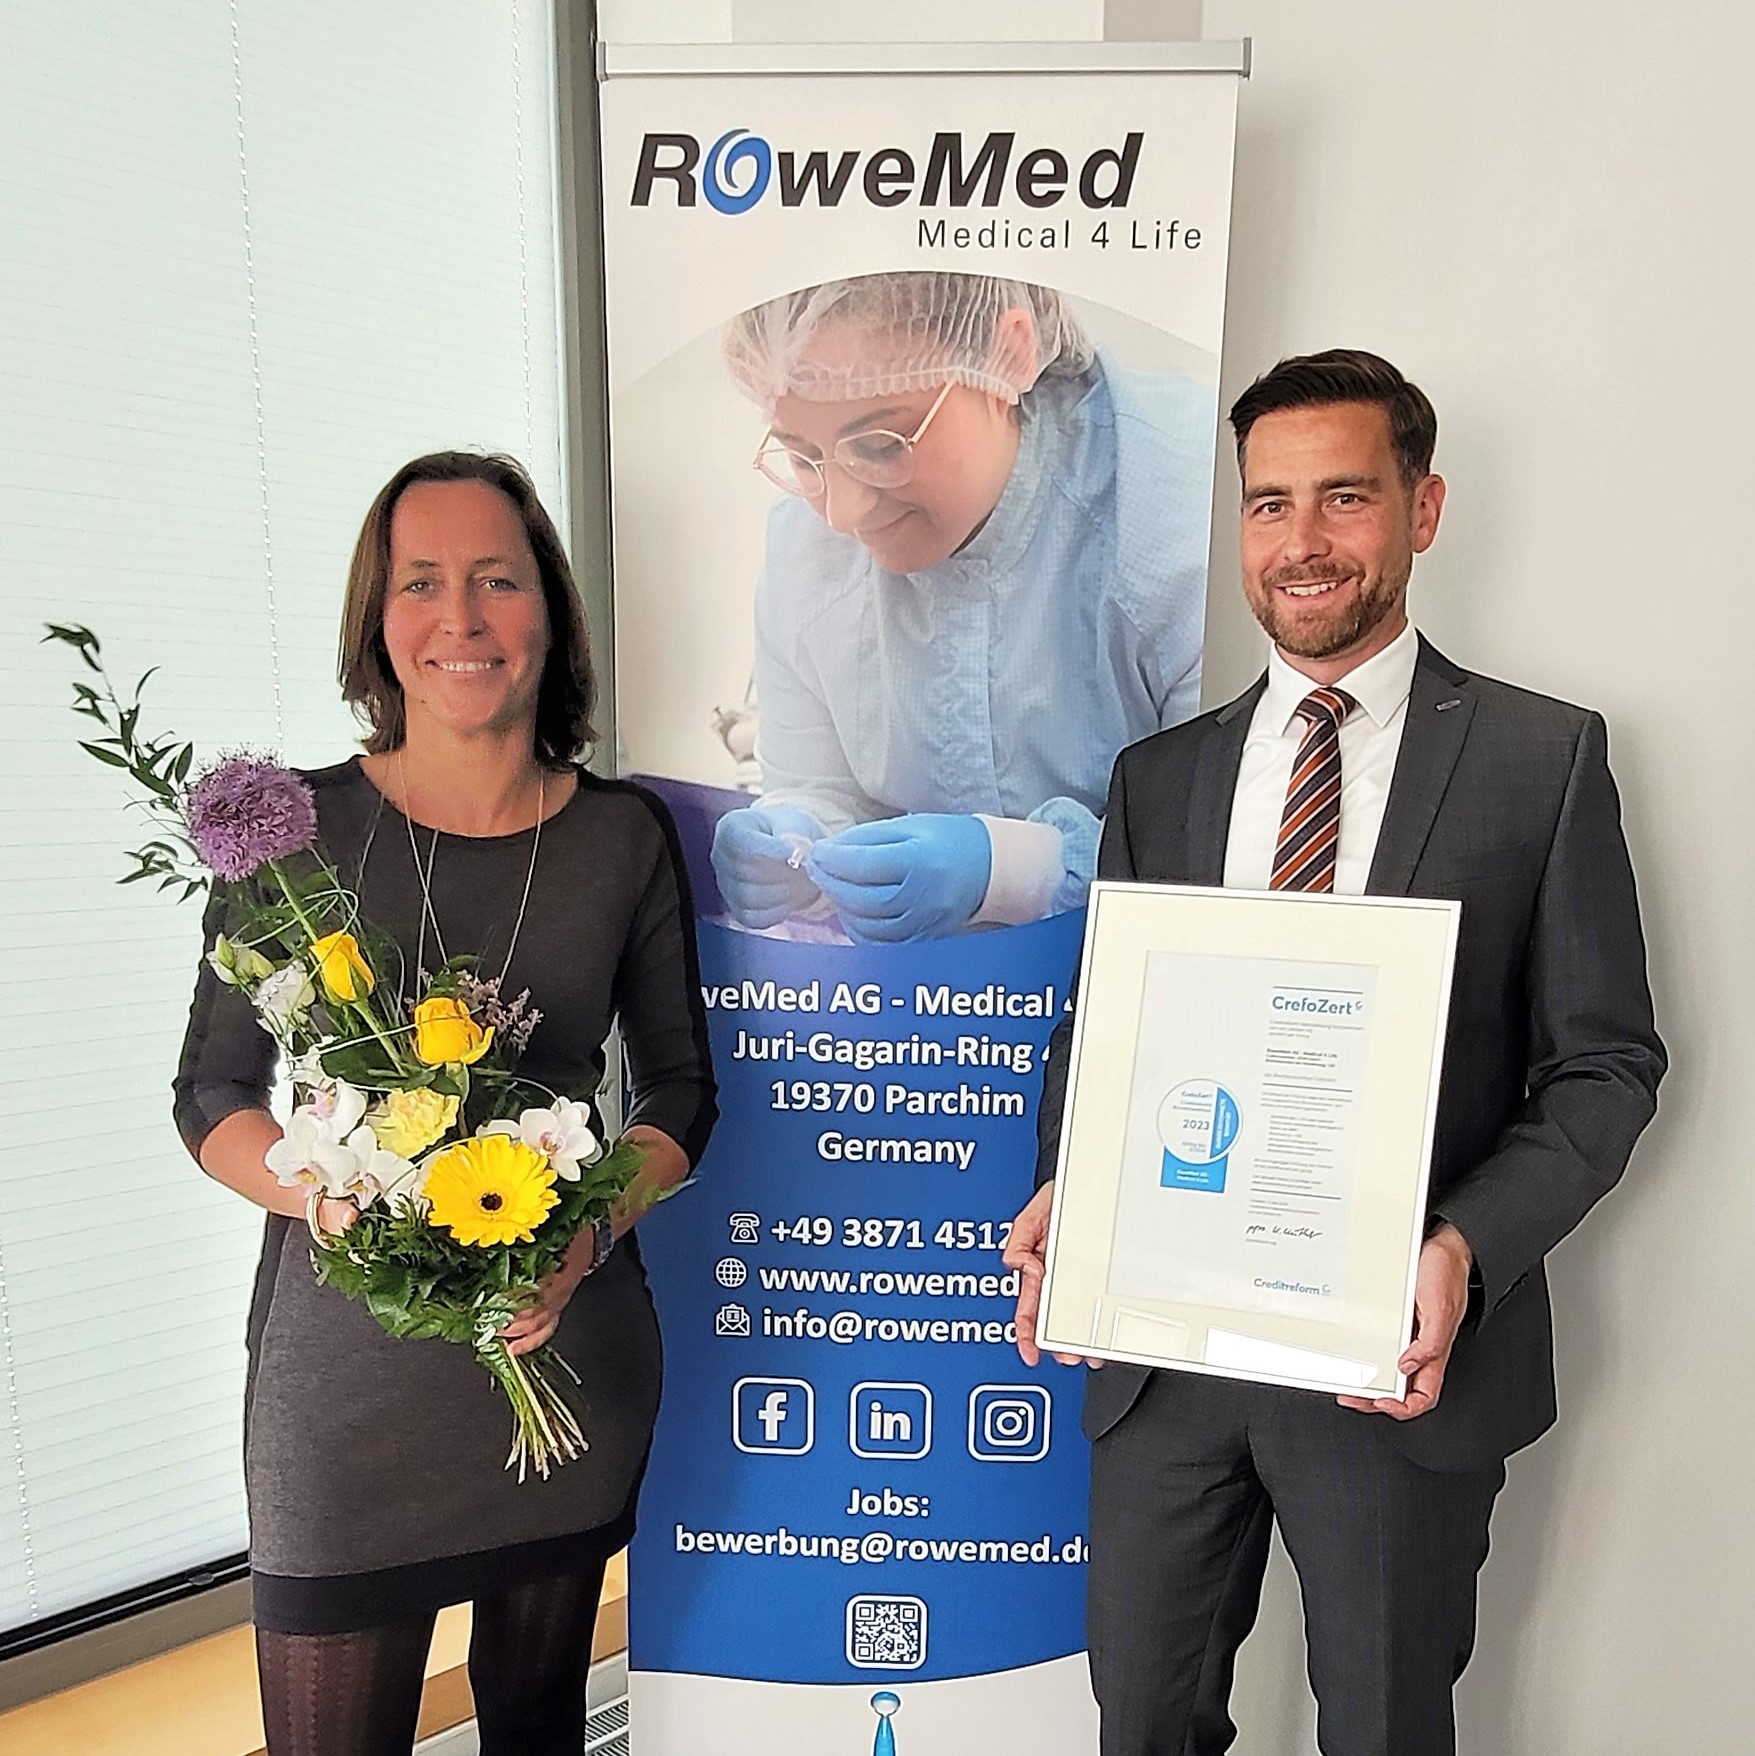 RoweMed | Medical 4 Life - News